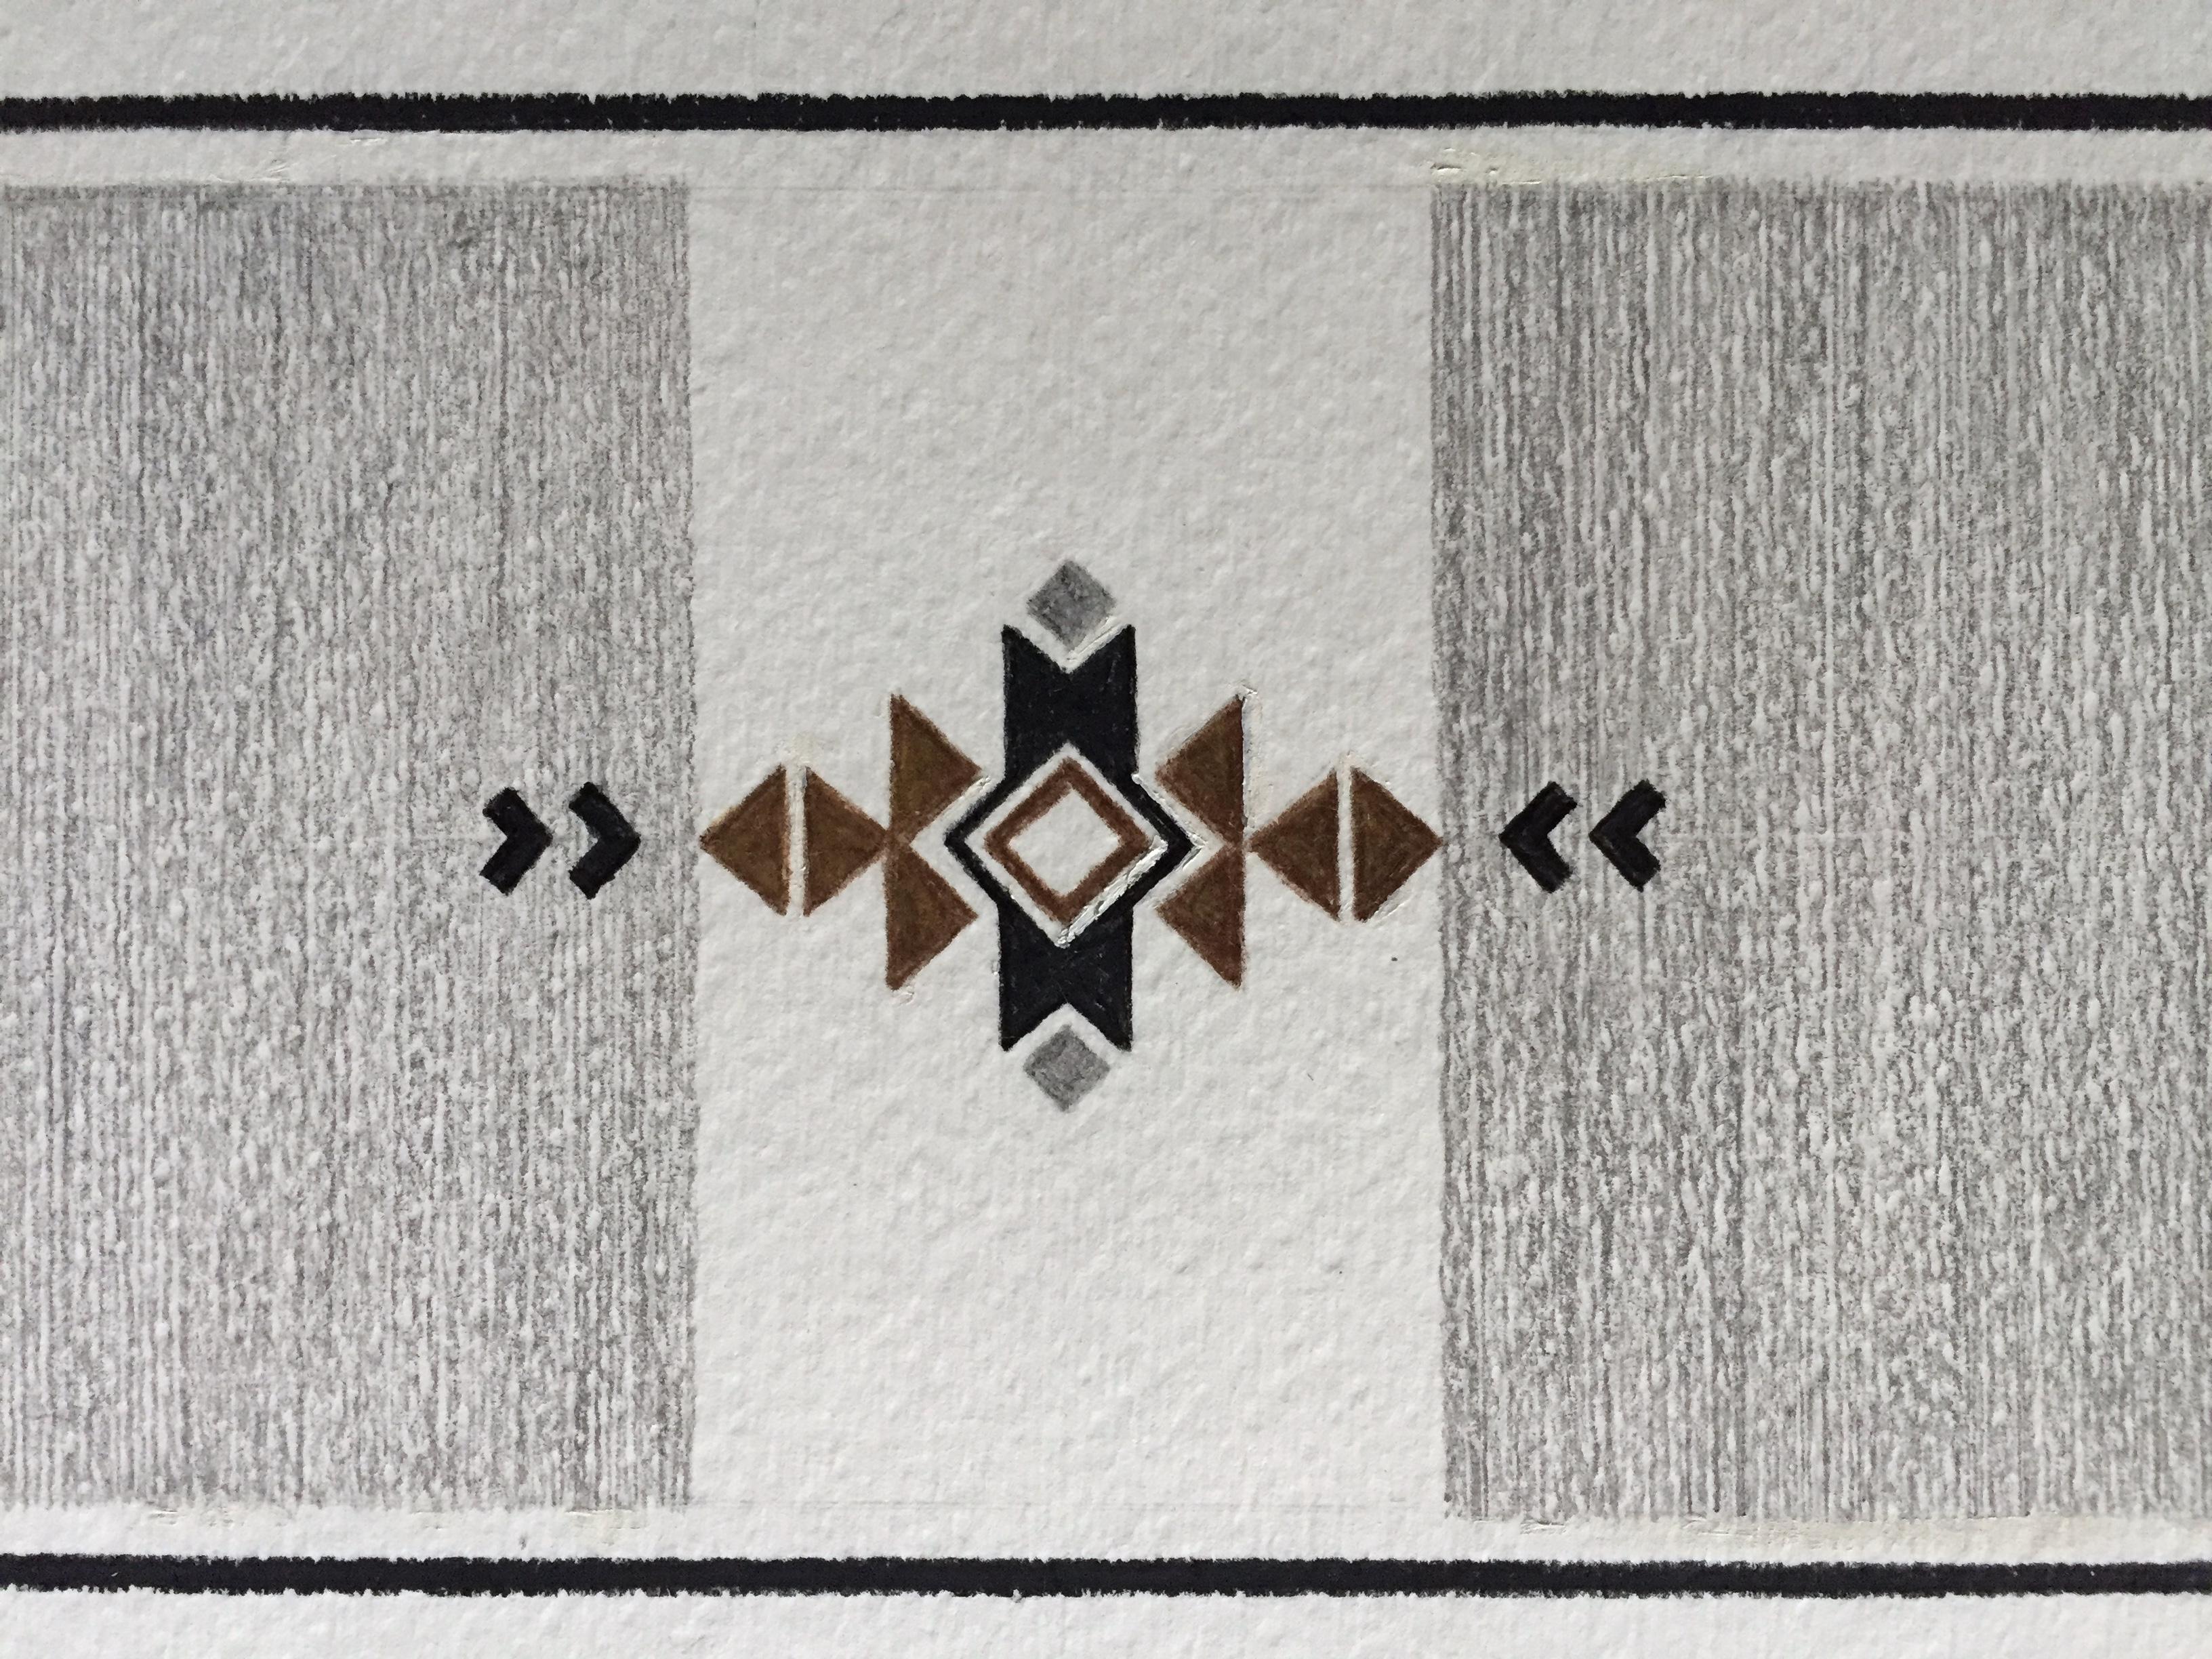 Magic Carpet Ride 4 (Navajo Inspired, Geometric Design, Black and White Artwork) For Sale 2